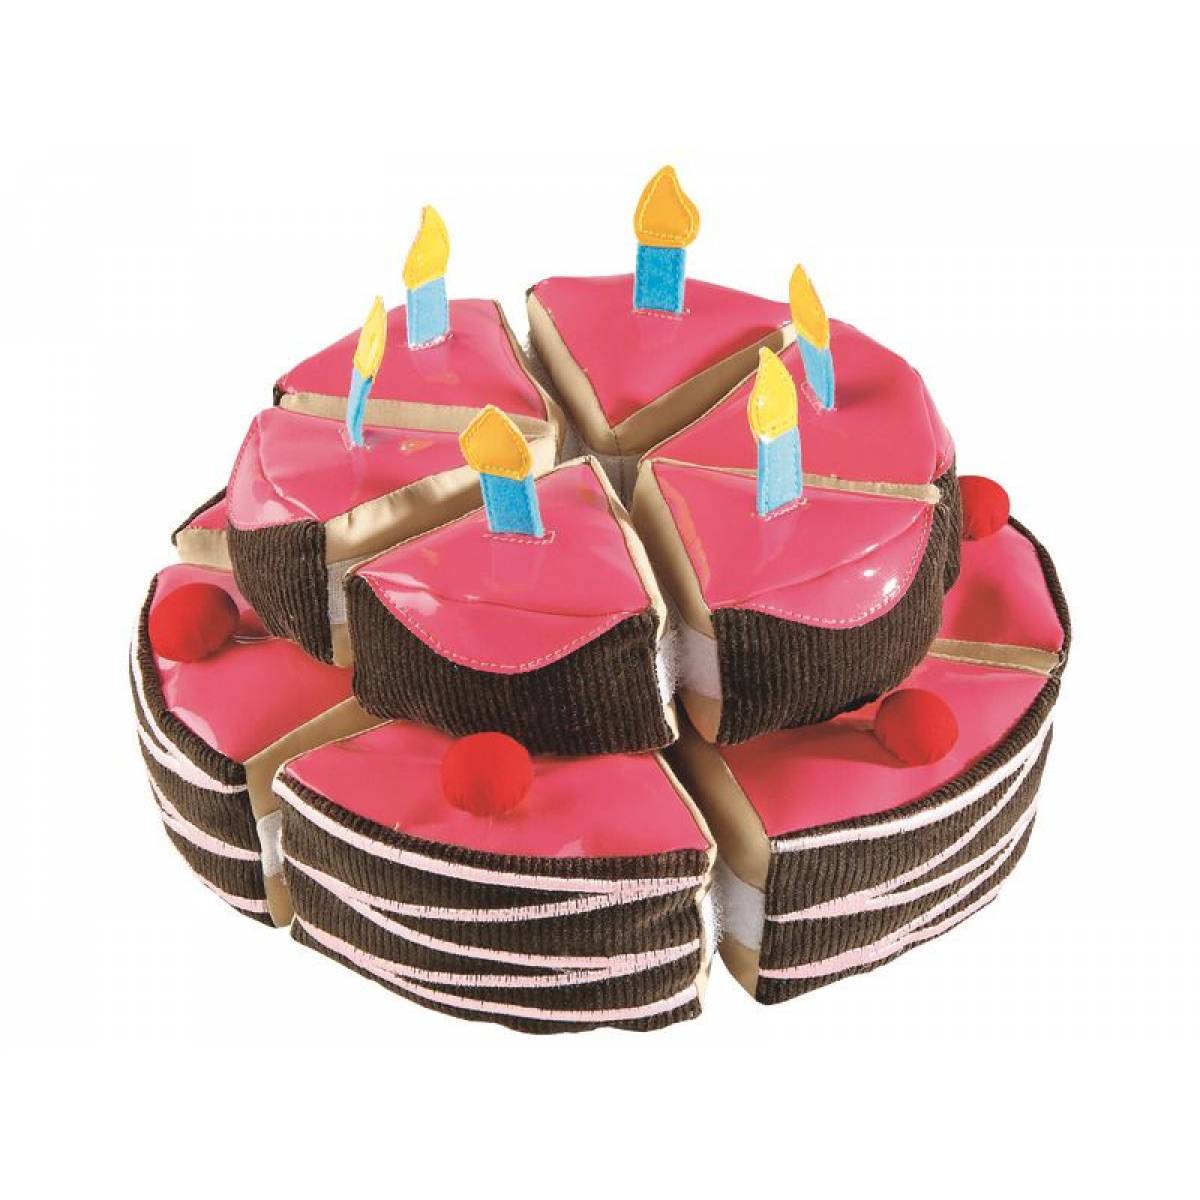 Maxi Birthday cake